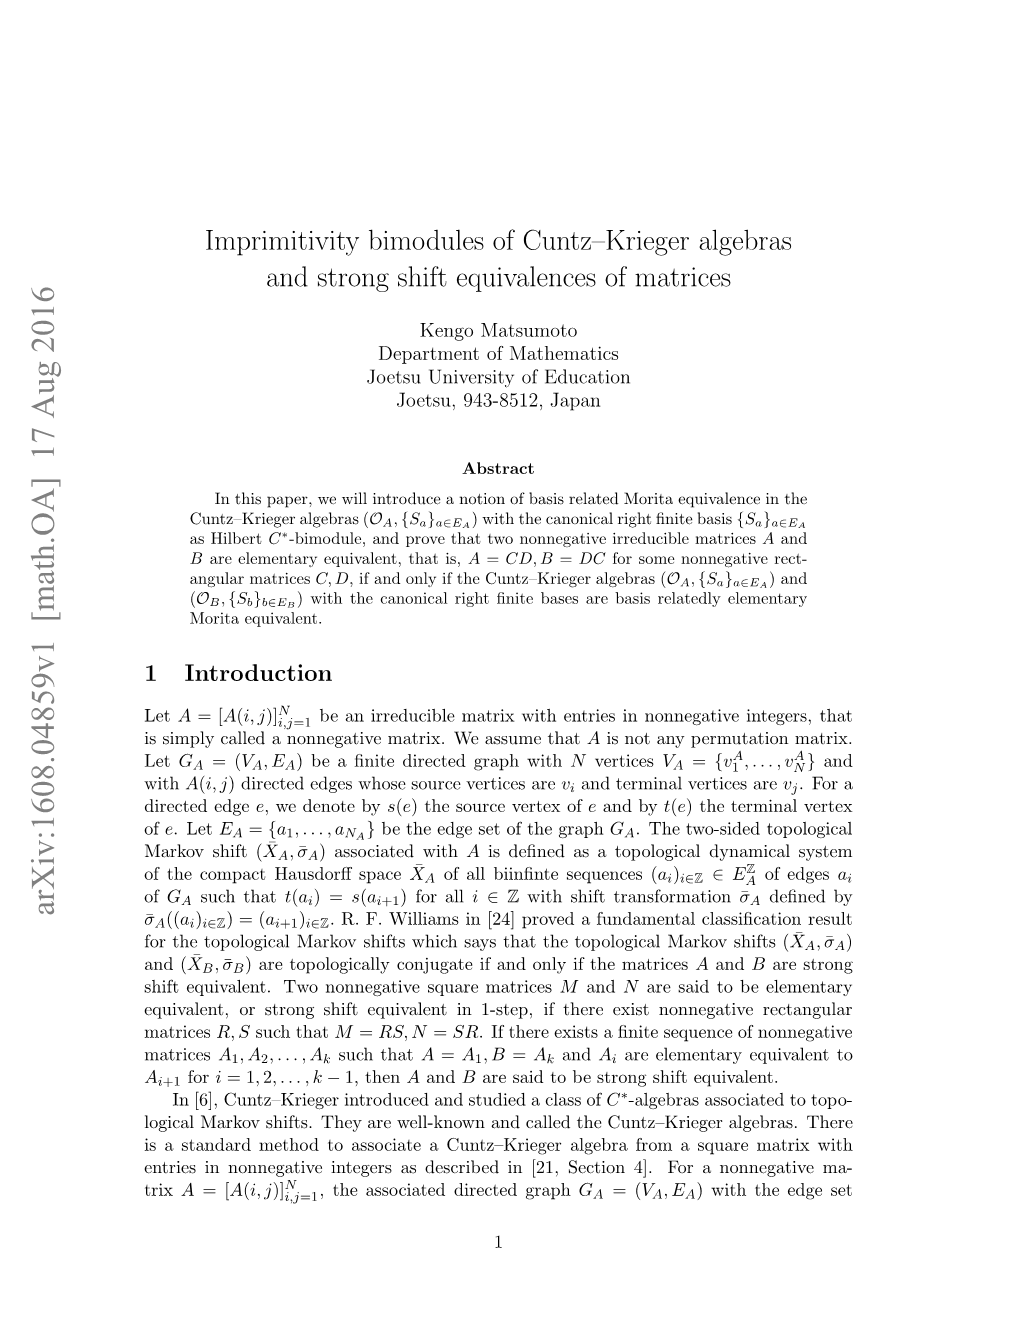 Imprimitivity Bimodules of Cuntz--Krieger Algebras and Strong